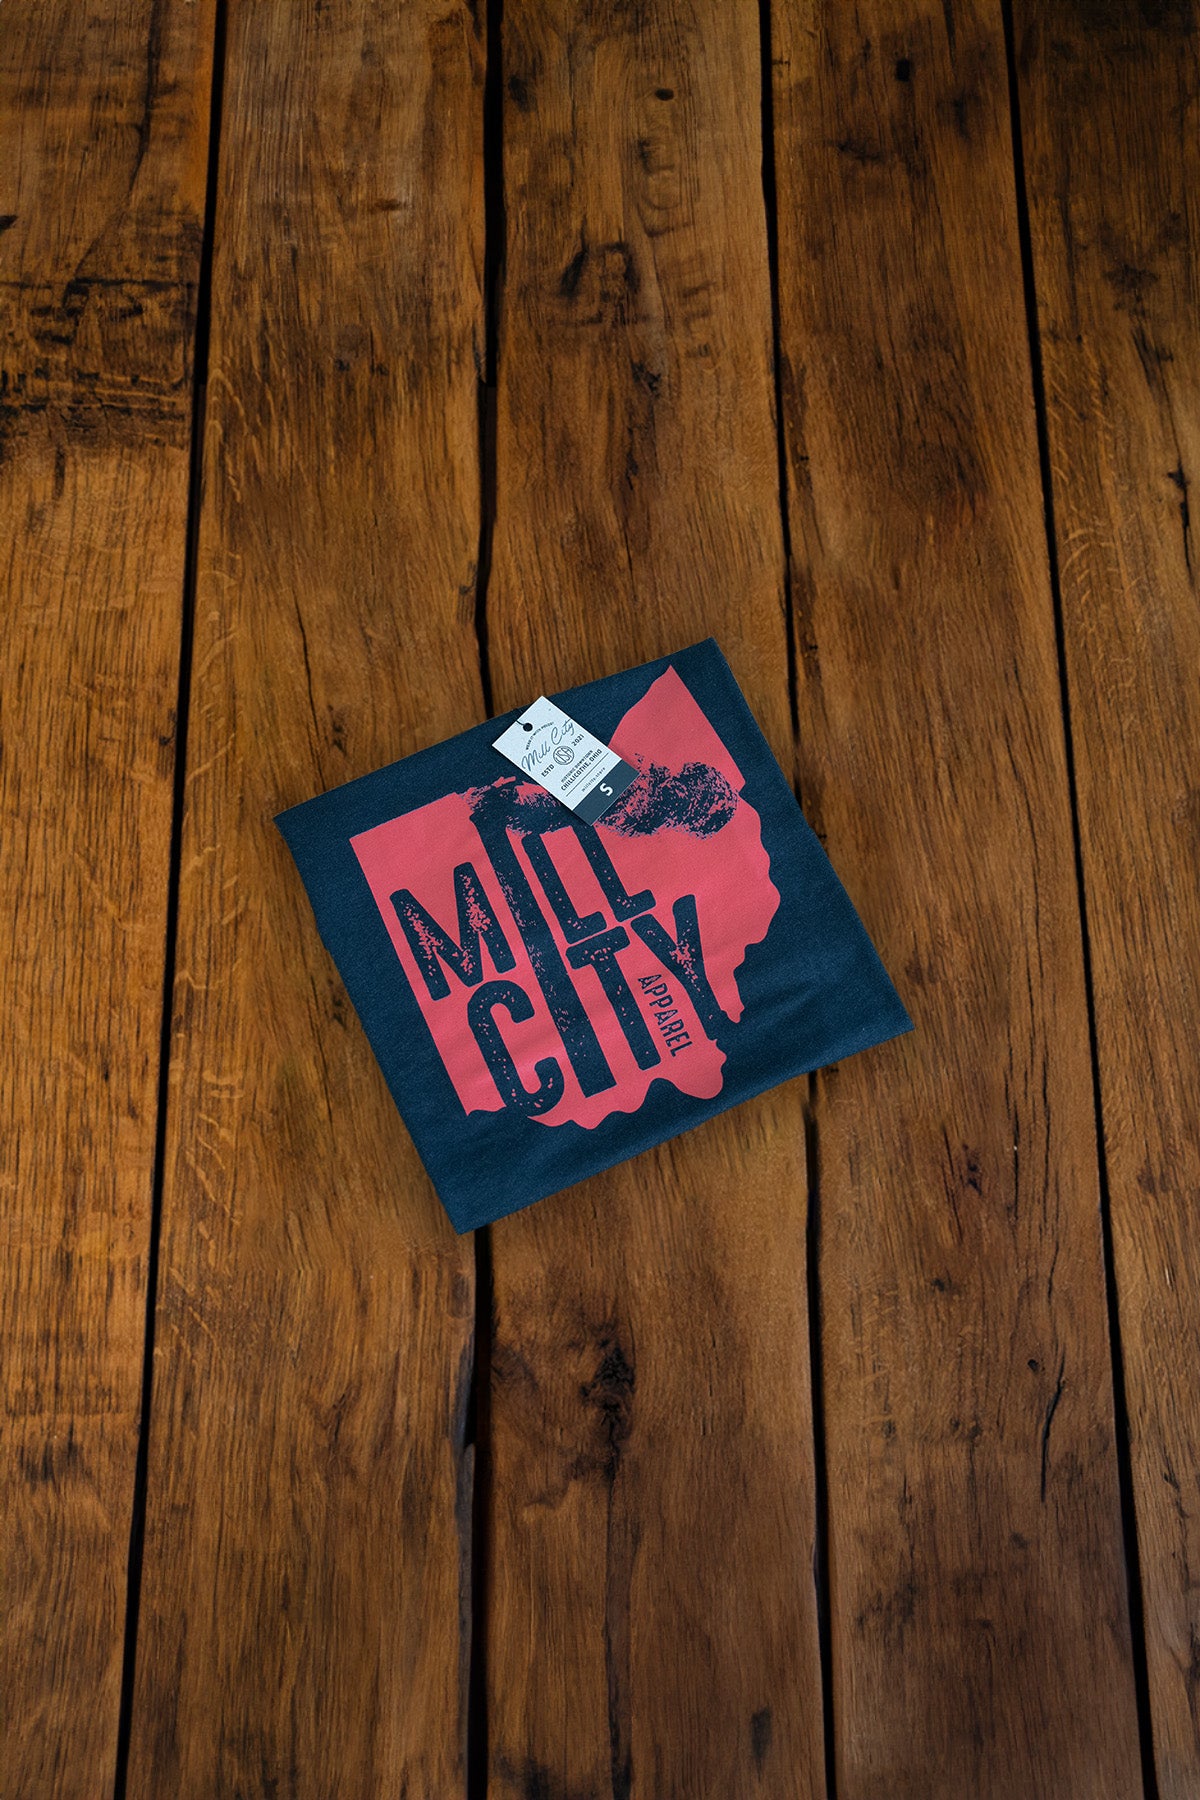 Mill City Ohio T-Shirt